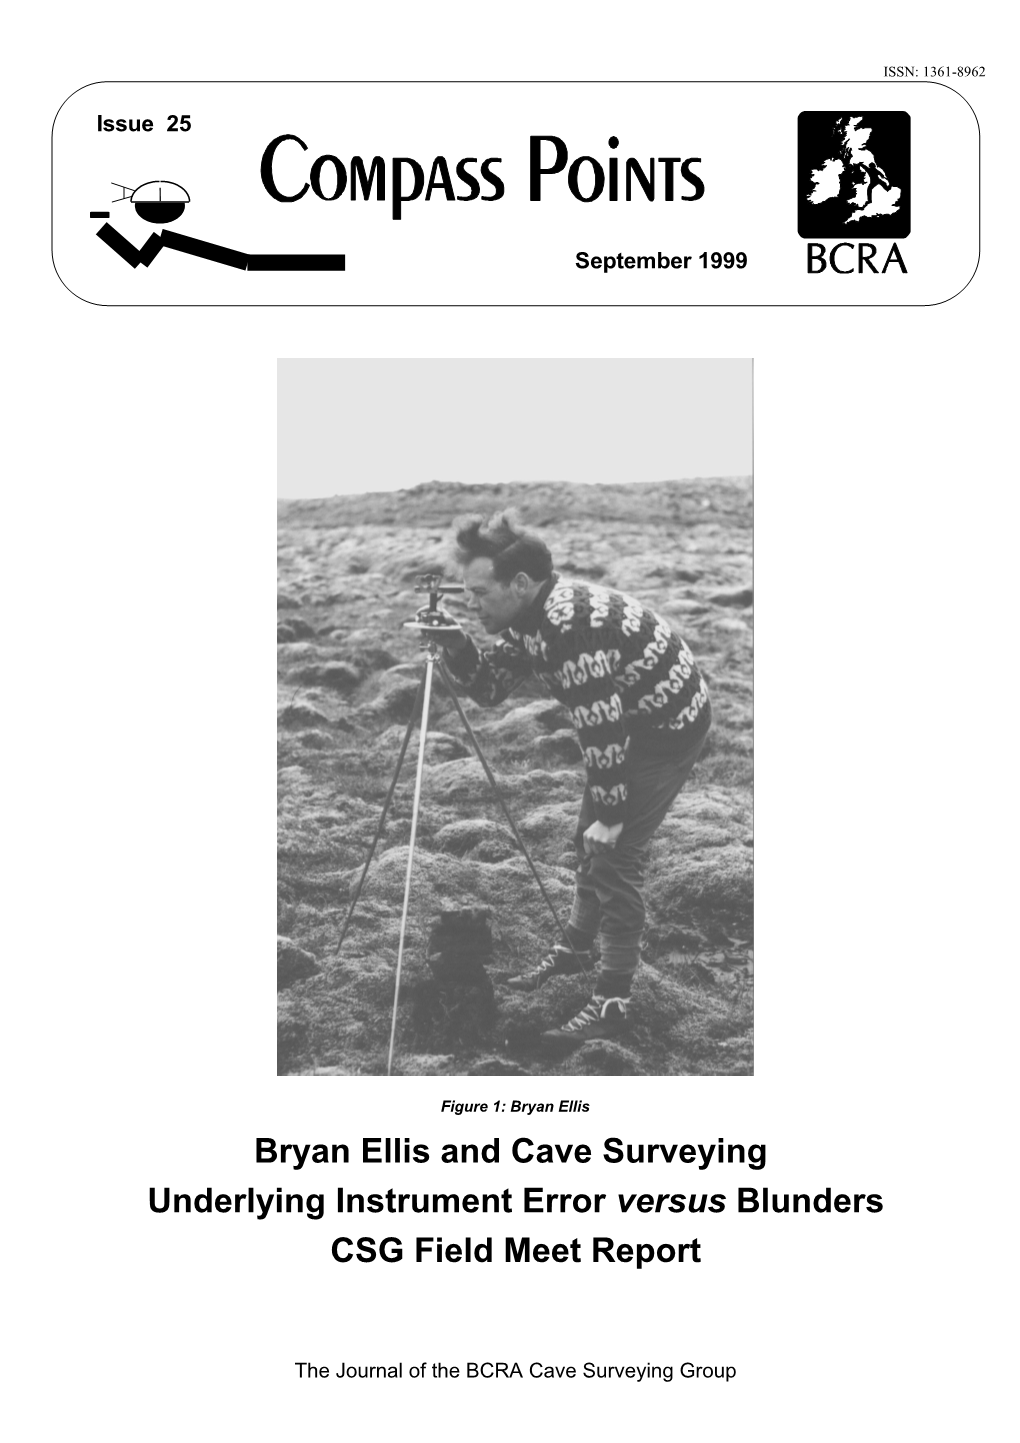 Bryan Ellis and Cave Surveying